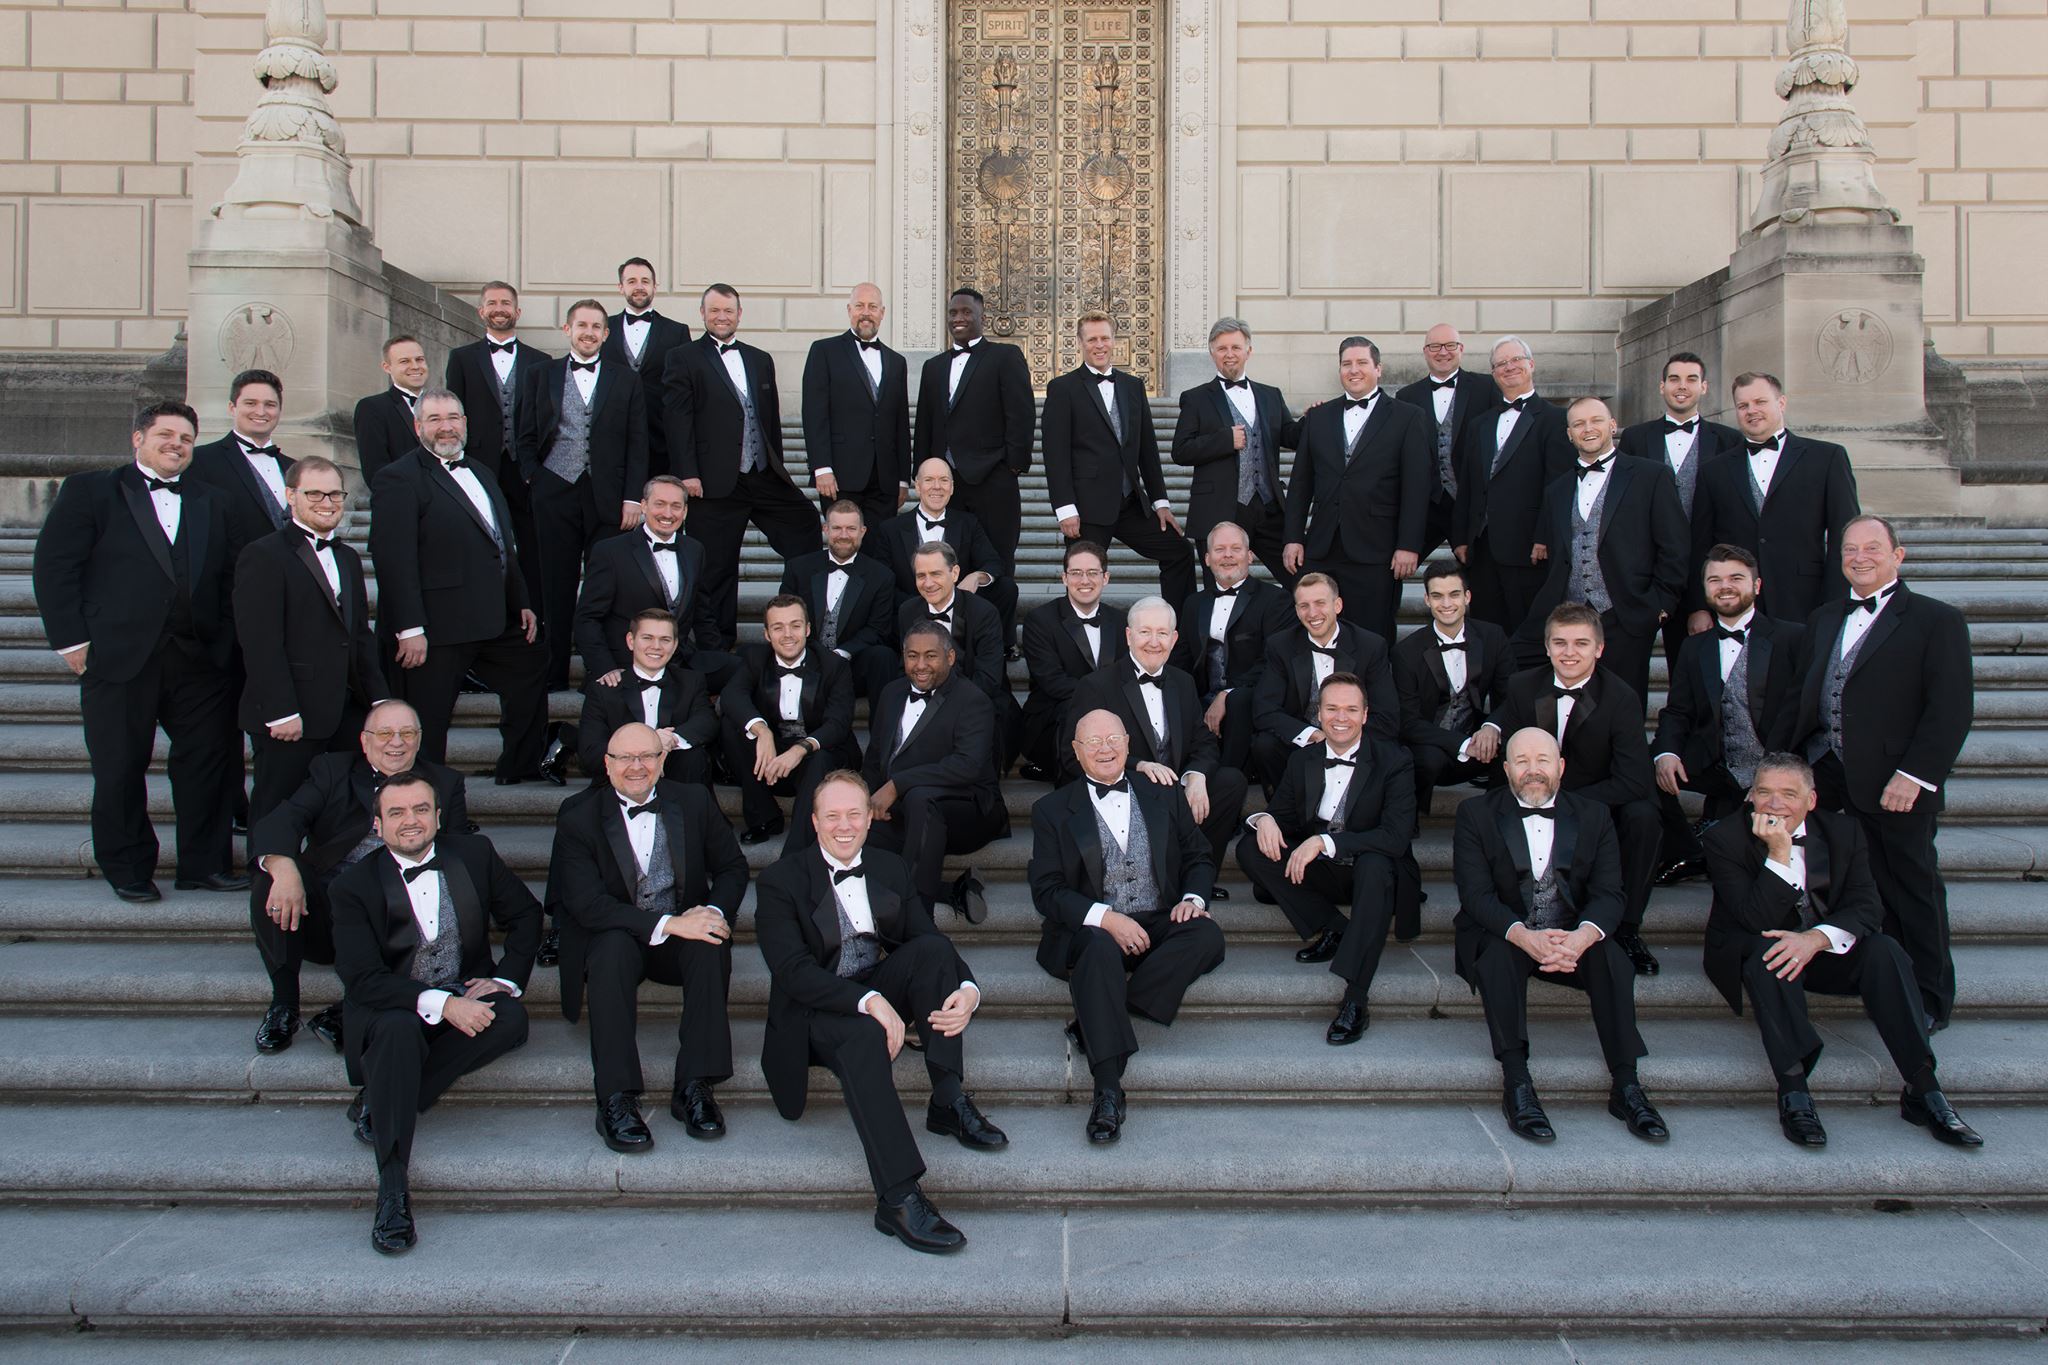 ABOUT — Indianapolis Men's Chorus